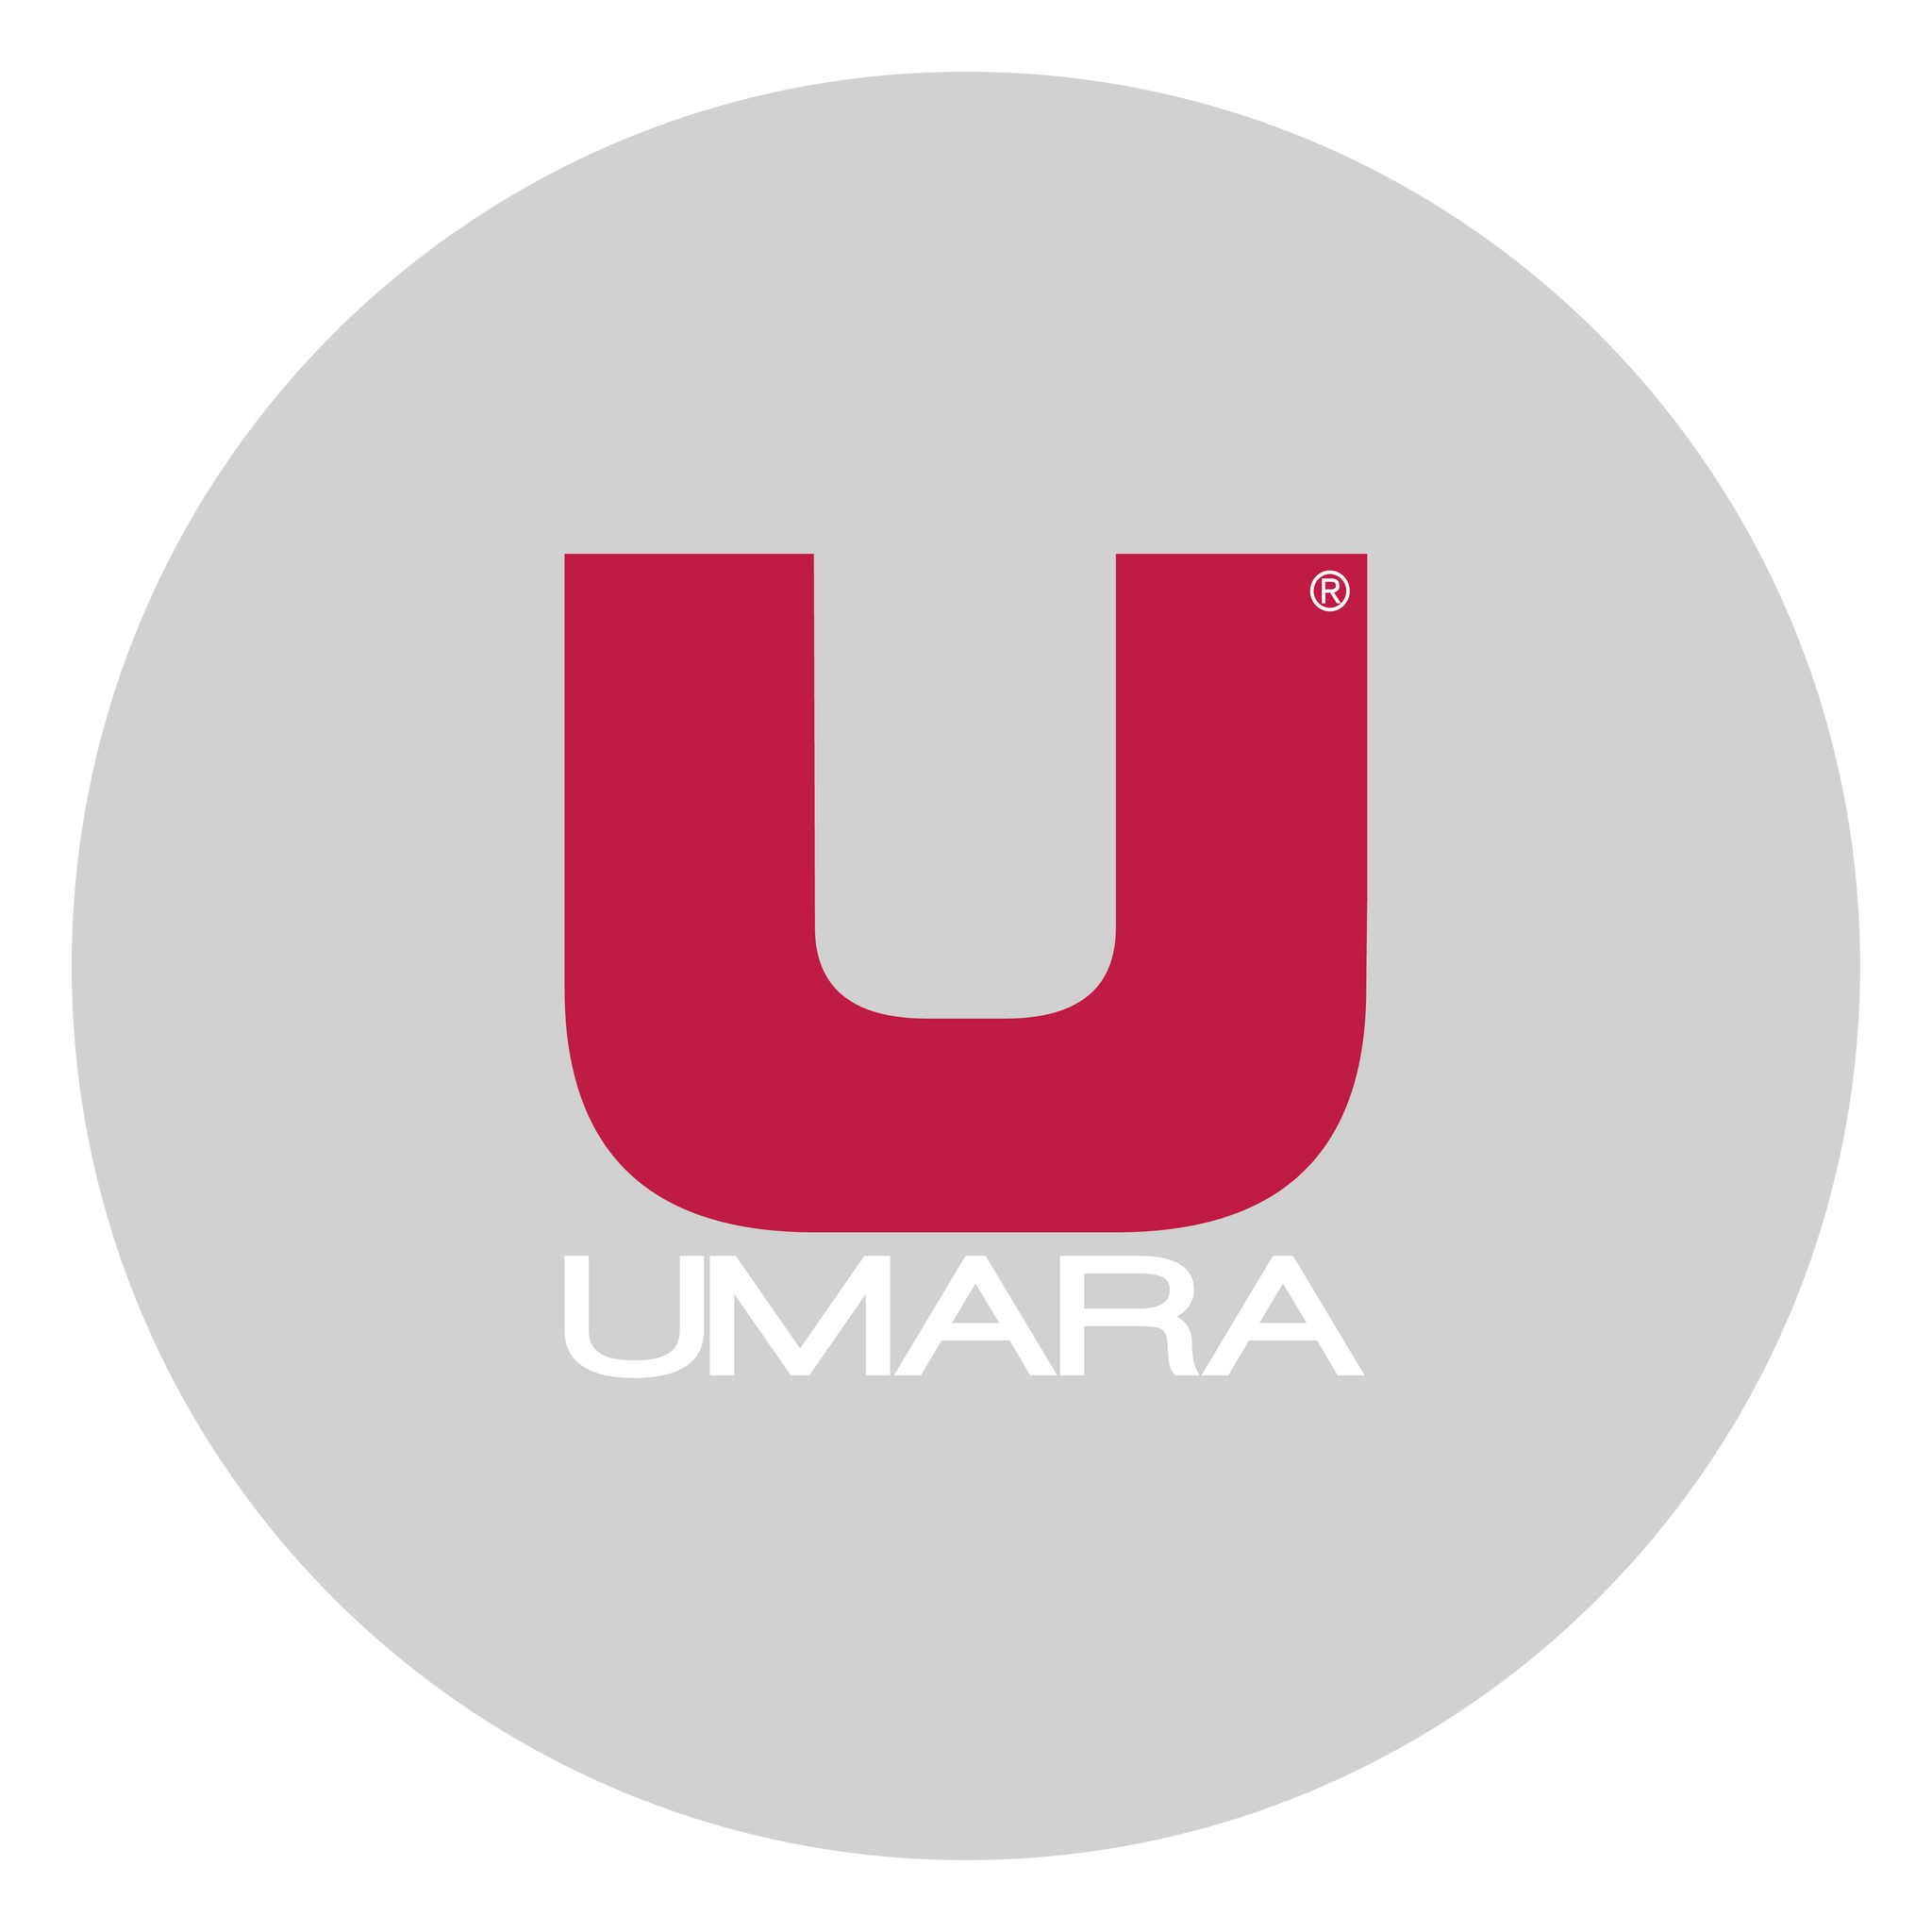 Umara Triathlon Halv/medeldistanspaket